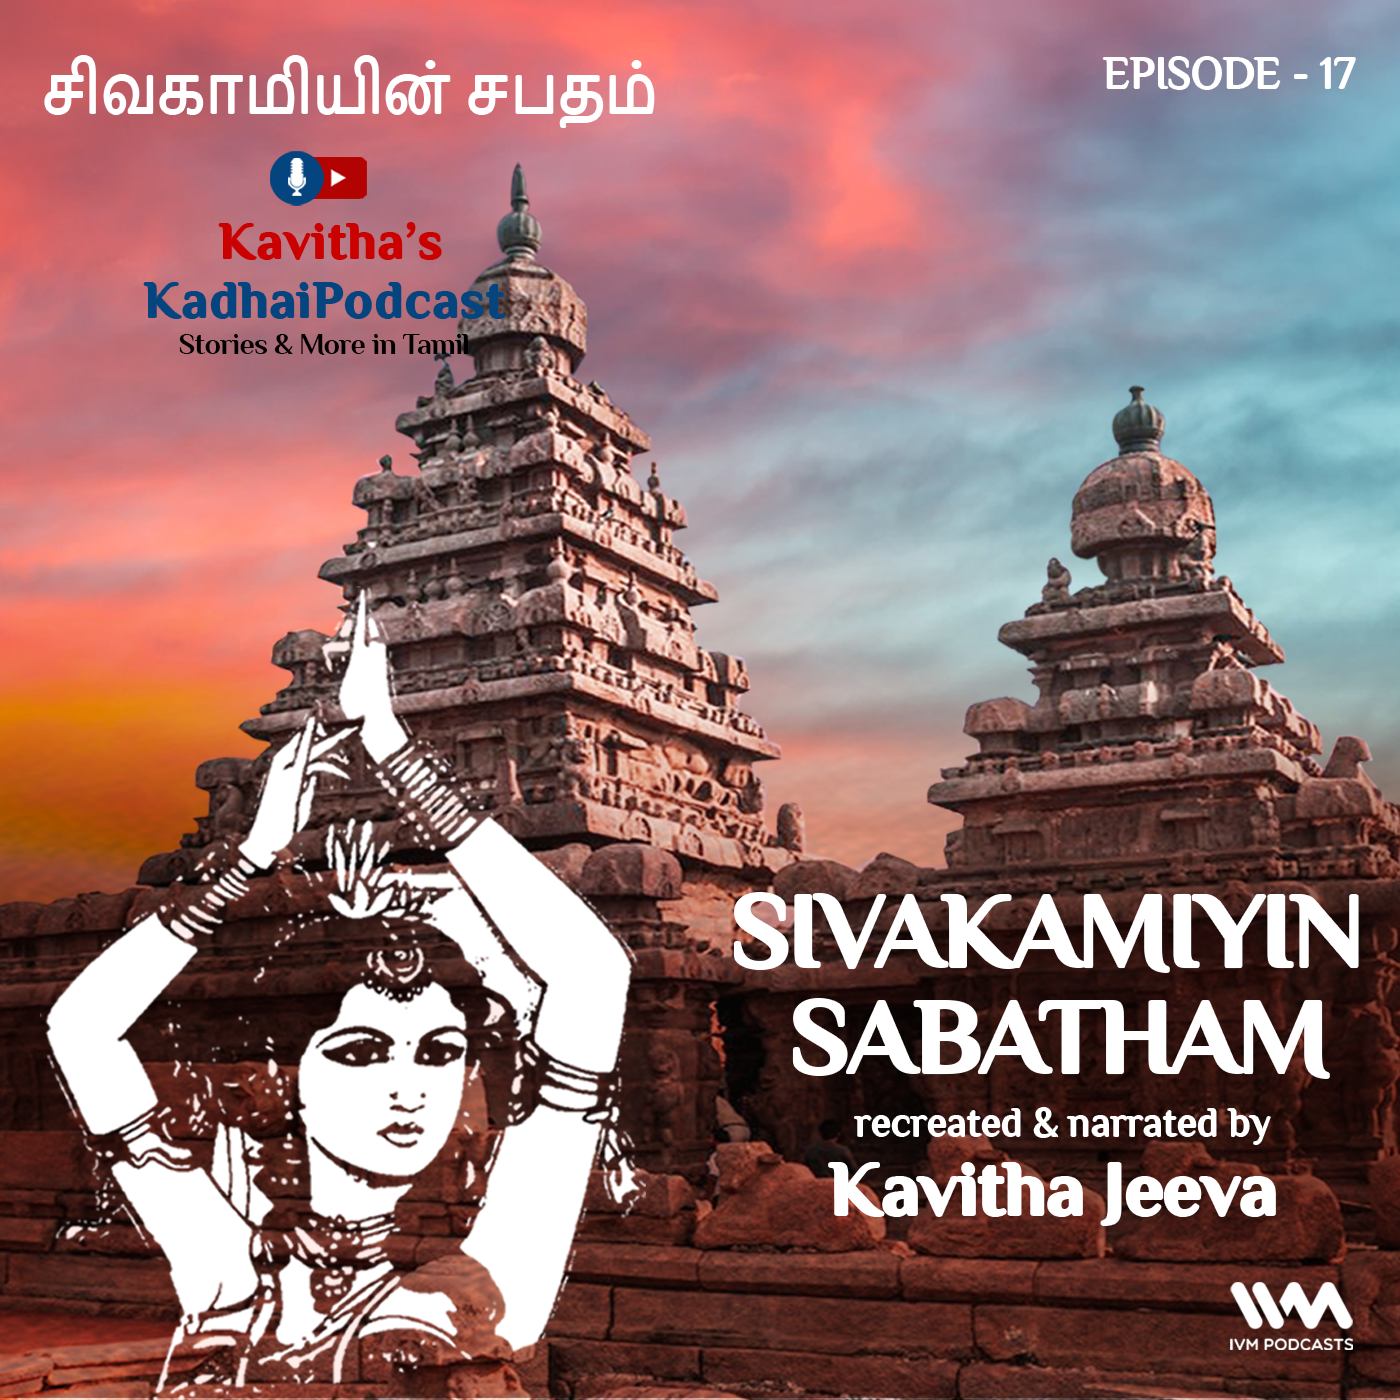 KadhaiPodcast's Sivakamiyin Sabatham - Episode # 17